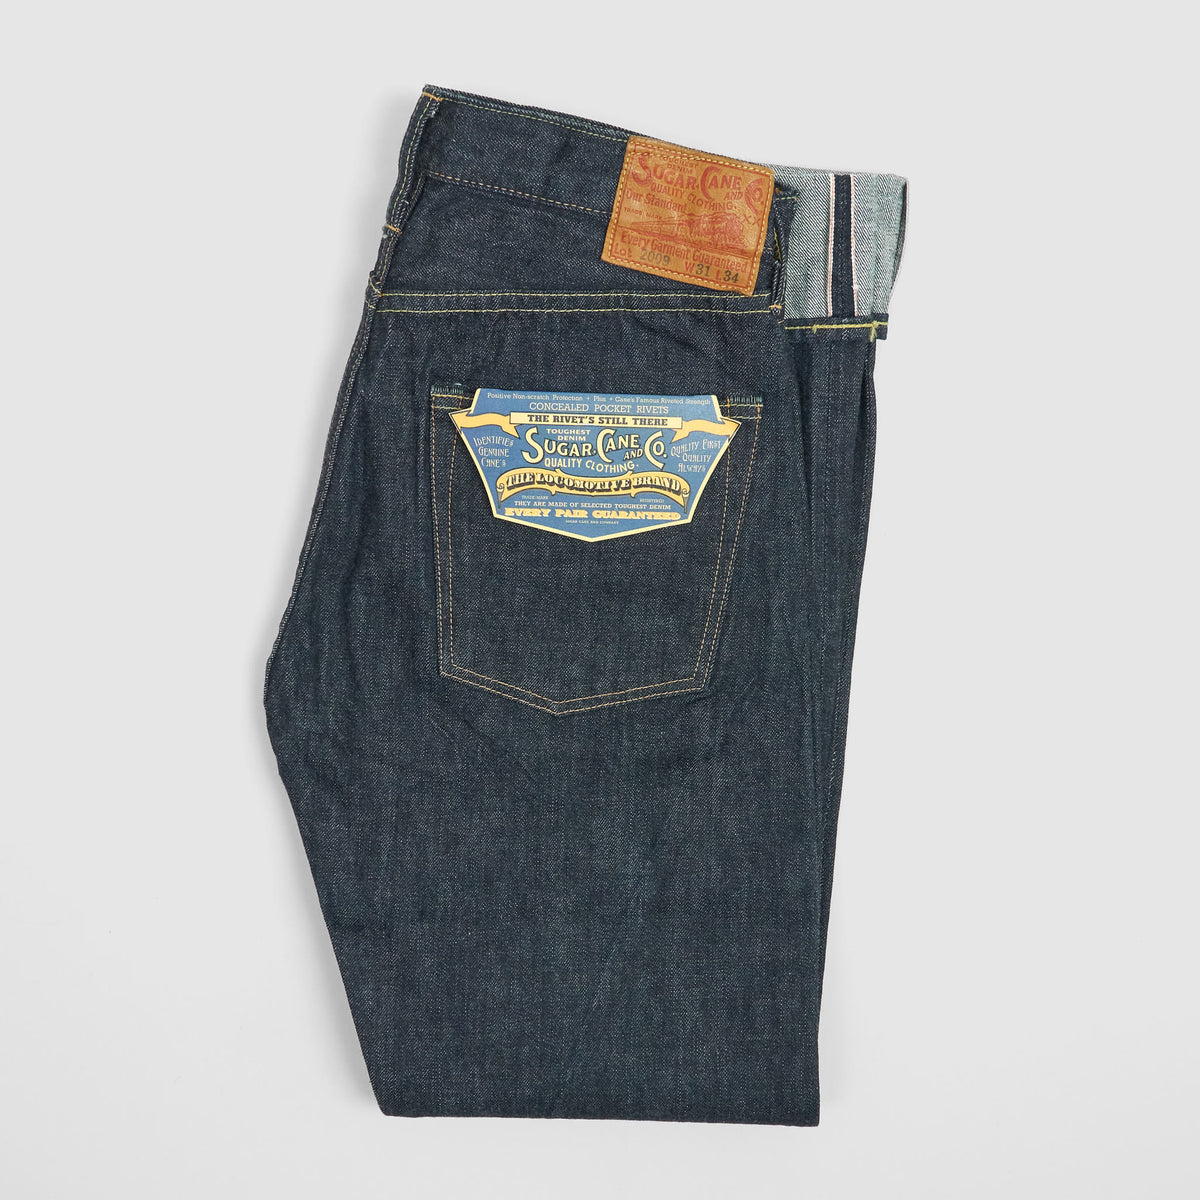 Sugar Cane 14,25oz 1947 Jeans- Regular Straight